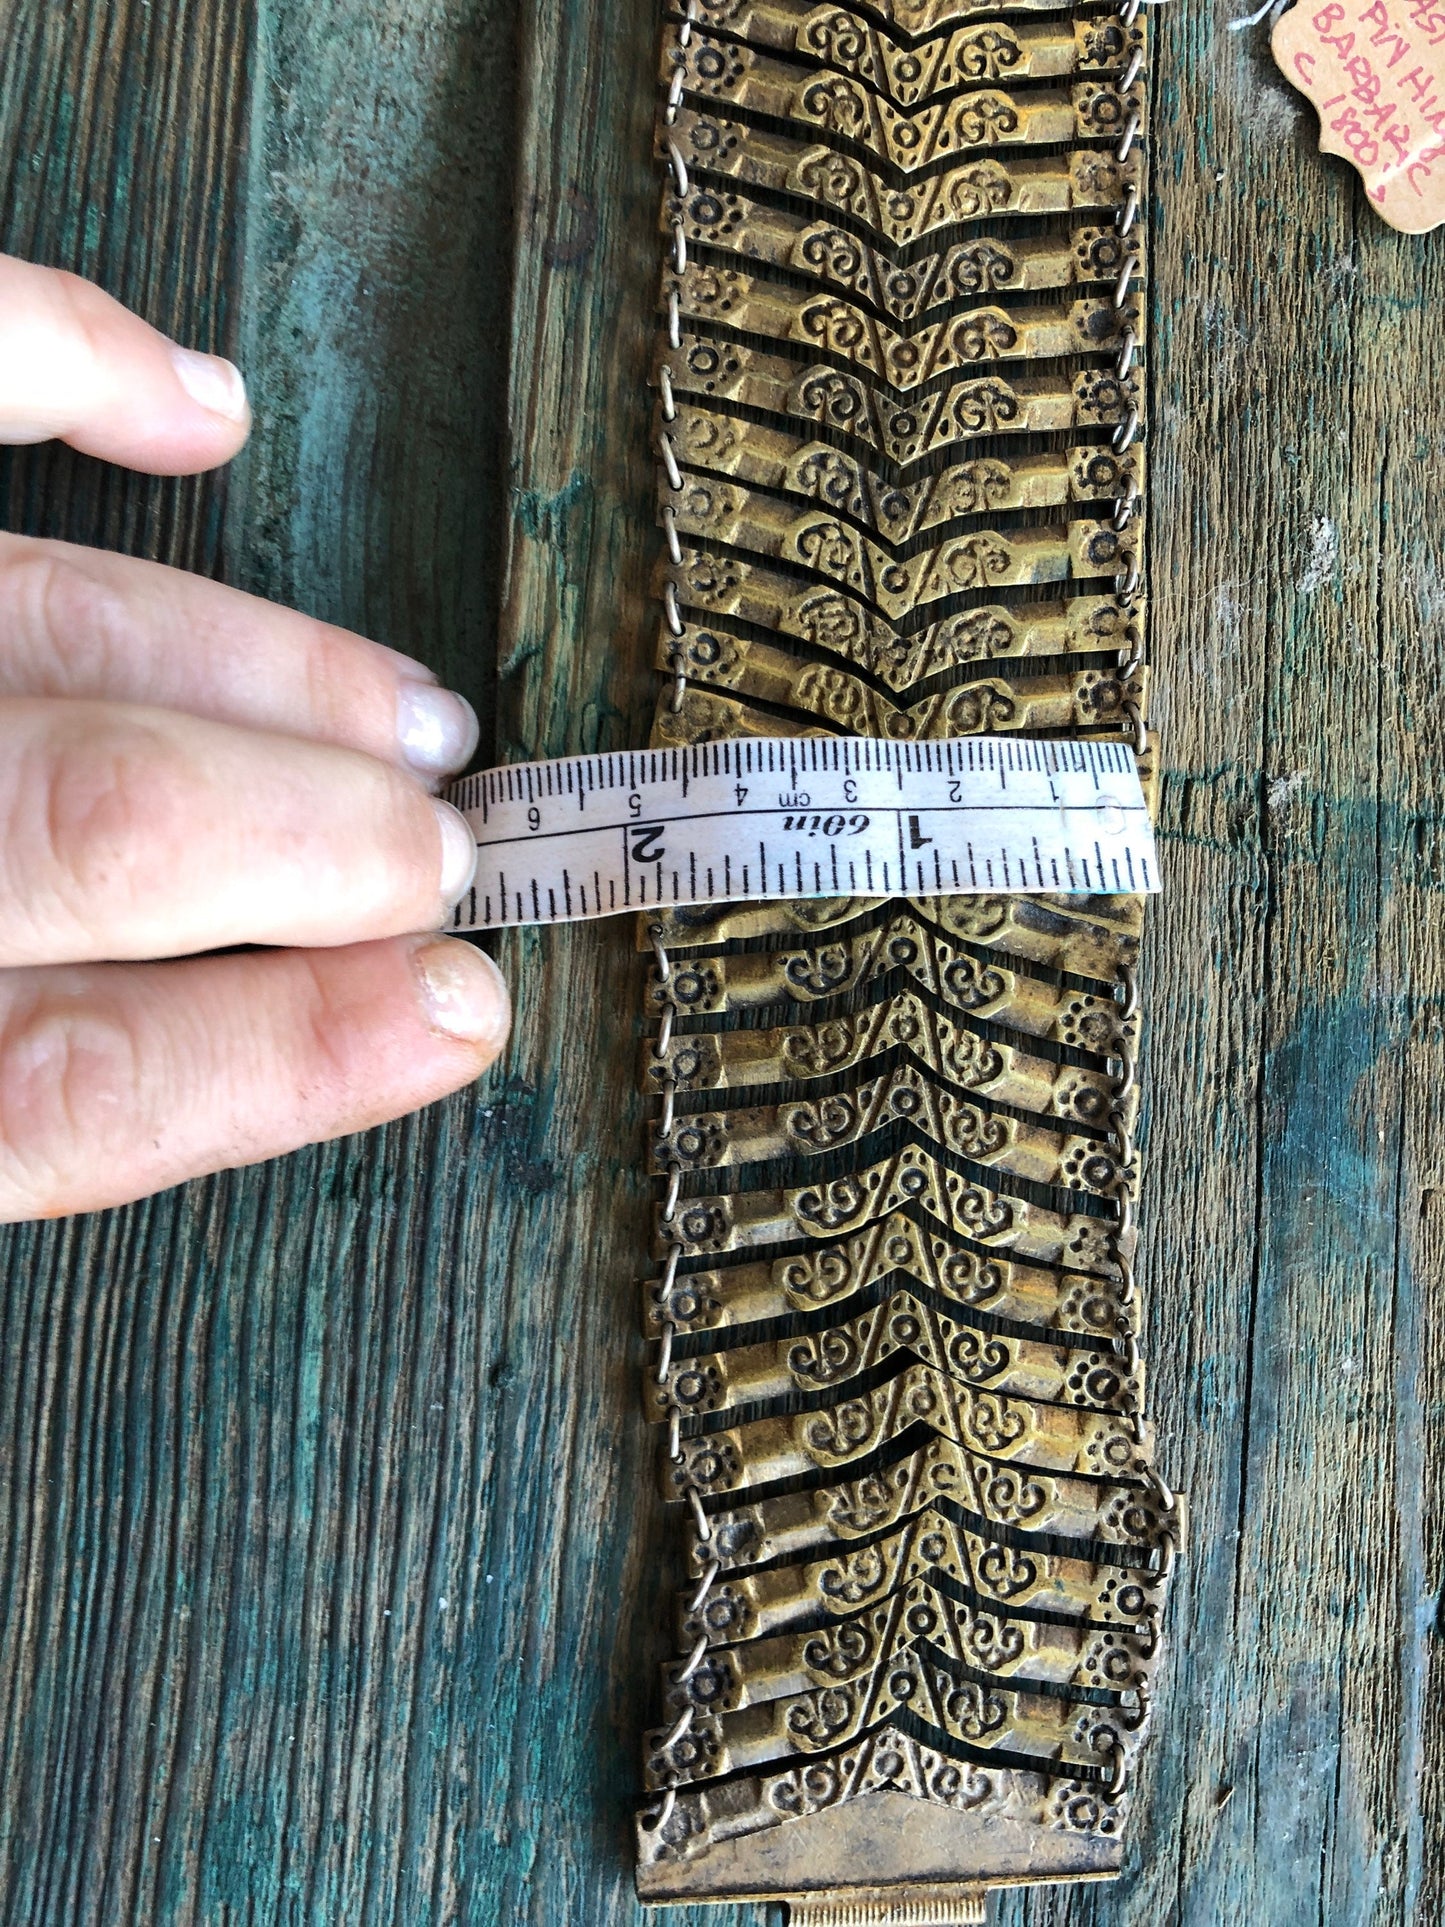 SALE Antique Barbaric Brass Pin Hinged Link Bracelet